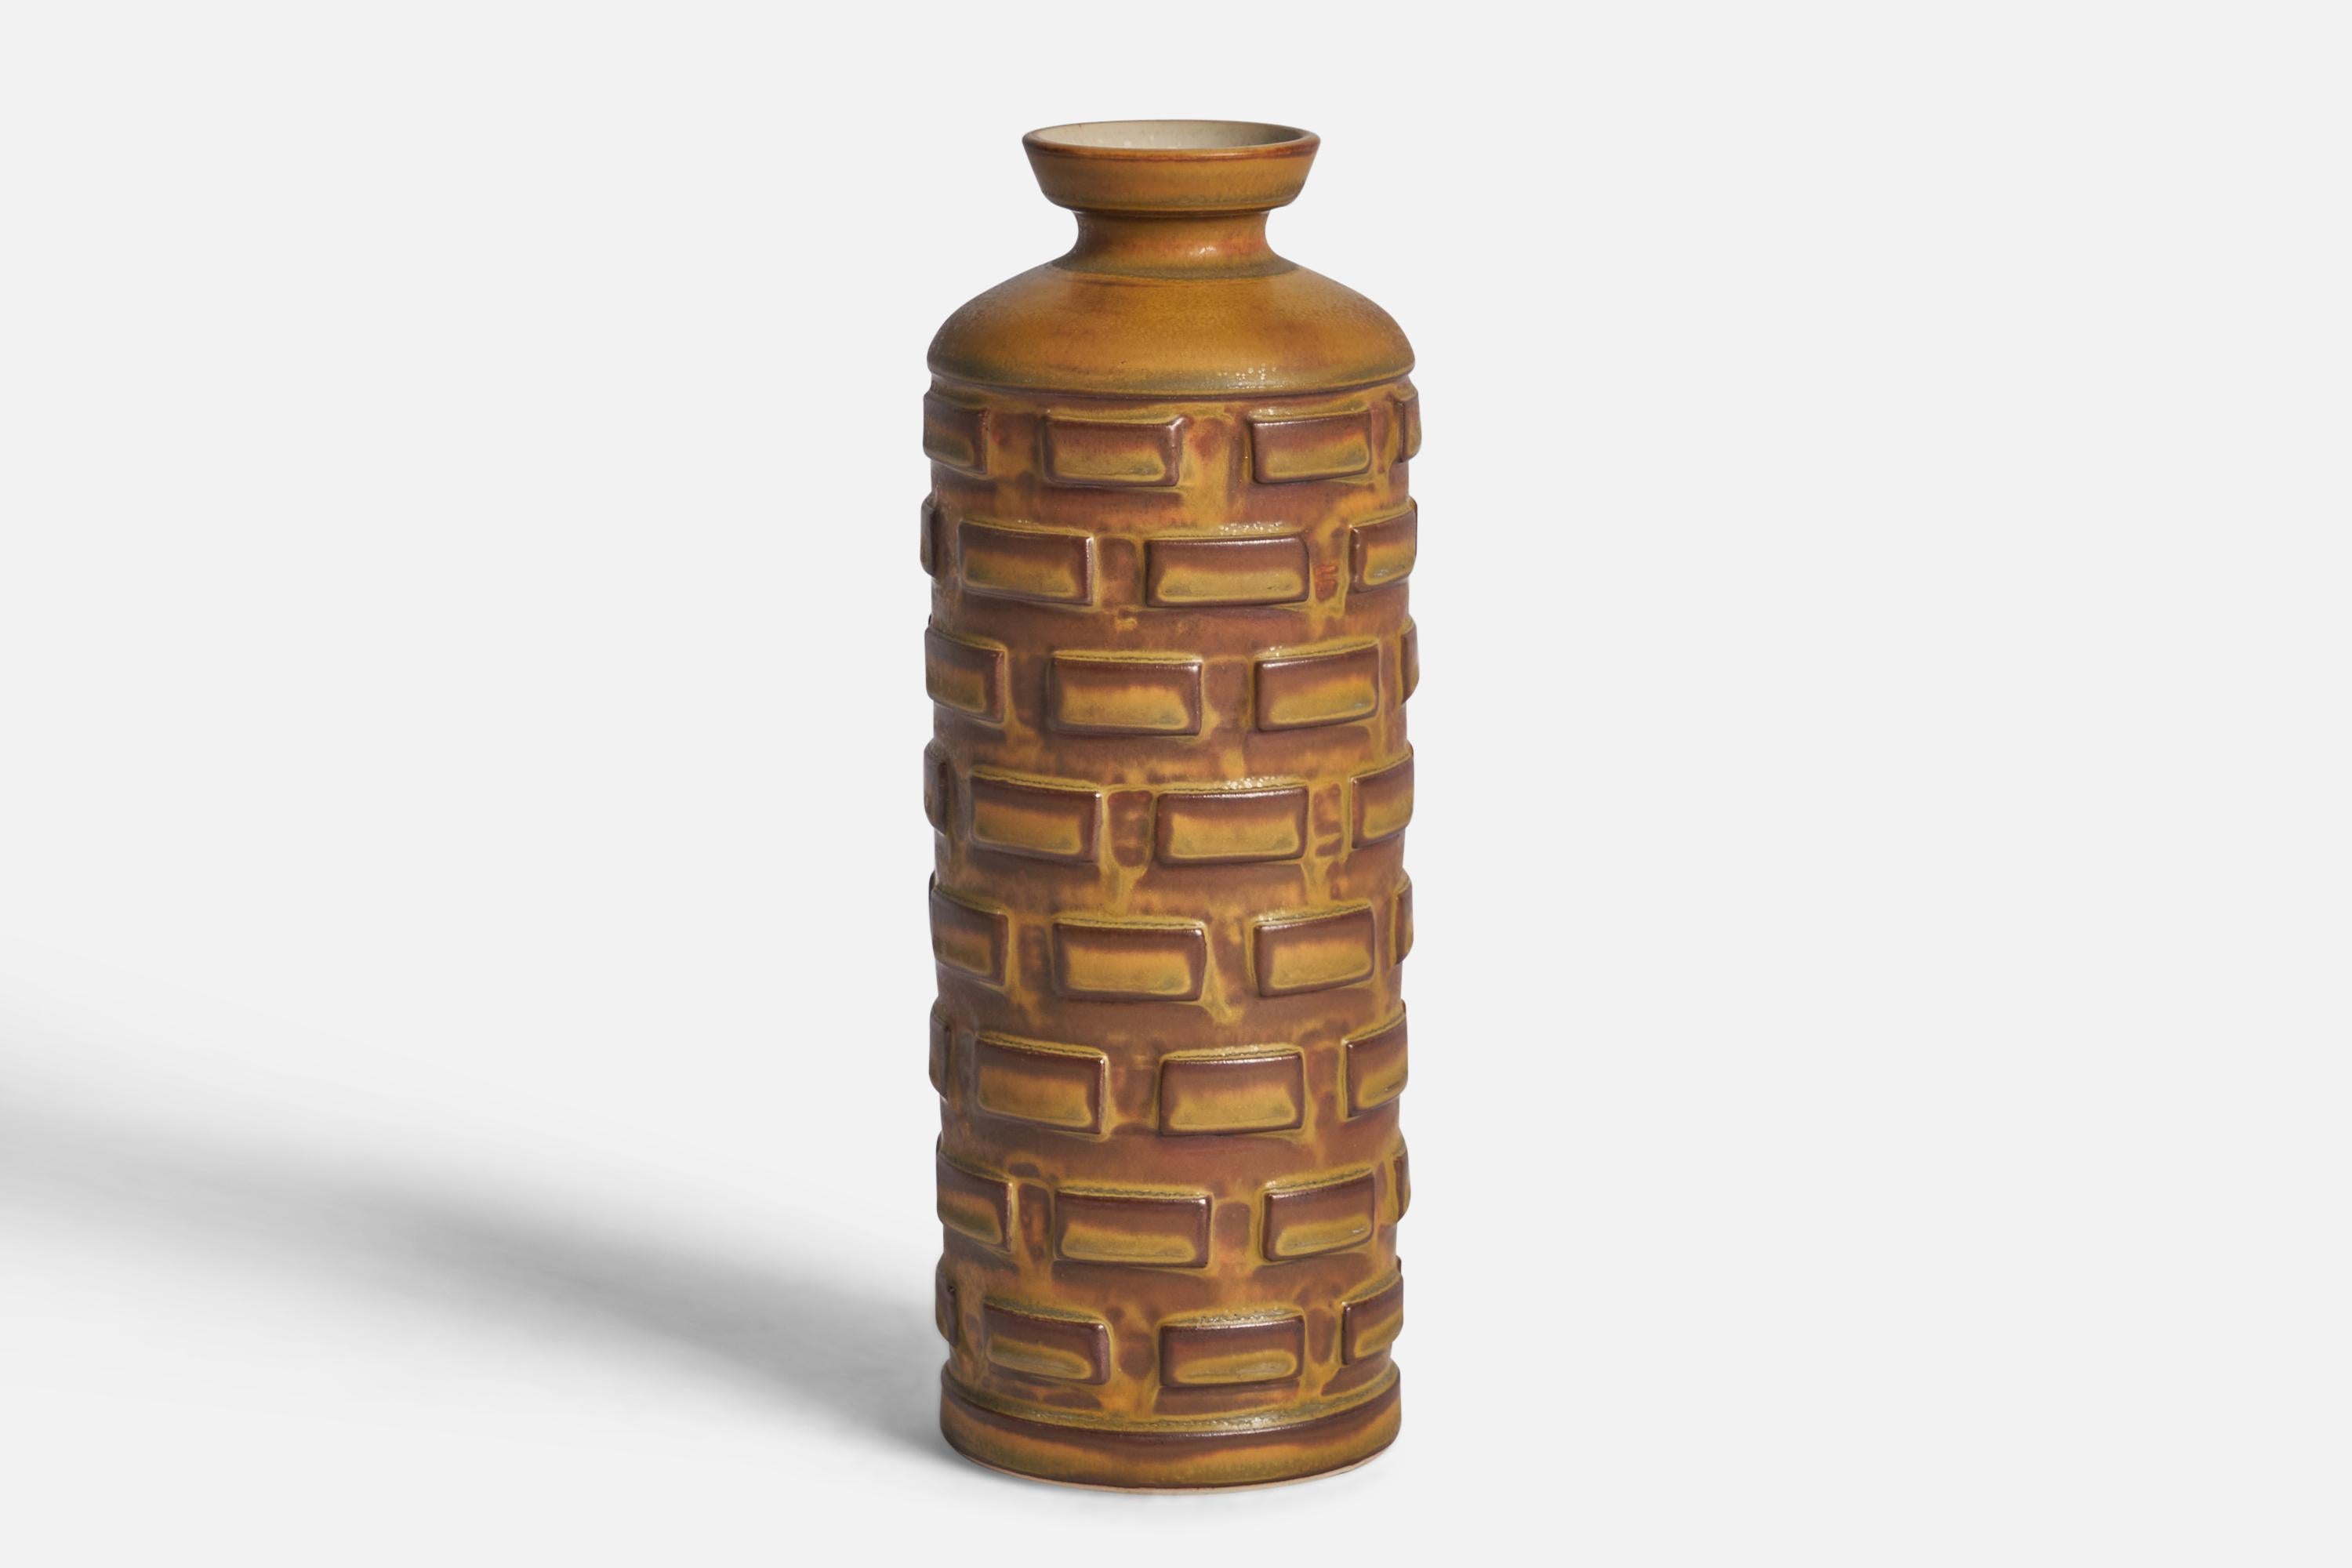 A brown-glazed stoneware vase designed and produced by Munk Keramik, Enköping, Sweden, 1960s.

“Munk” signature on bottom